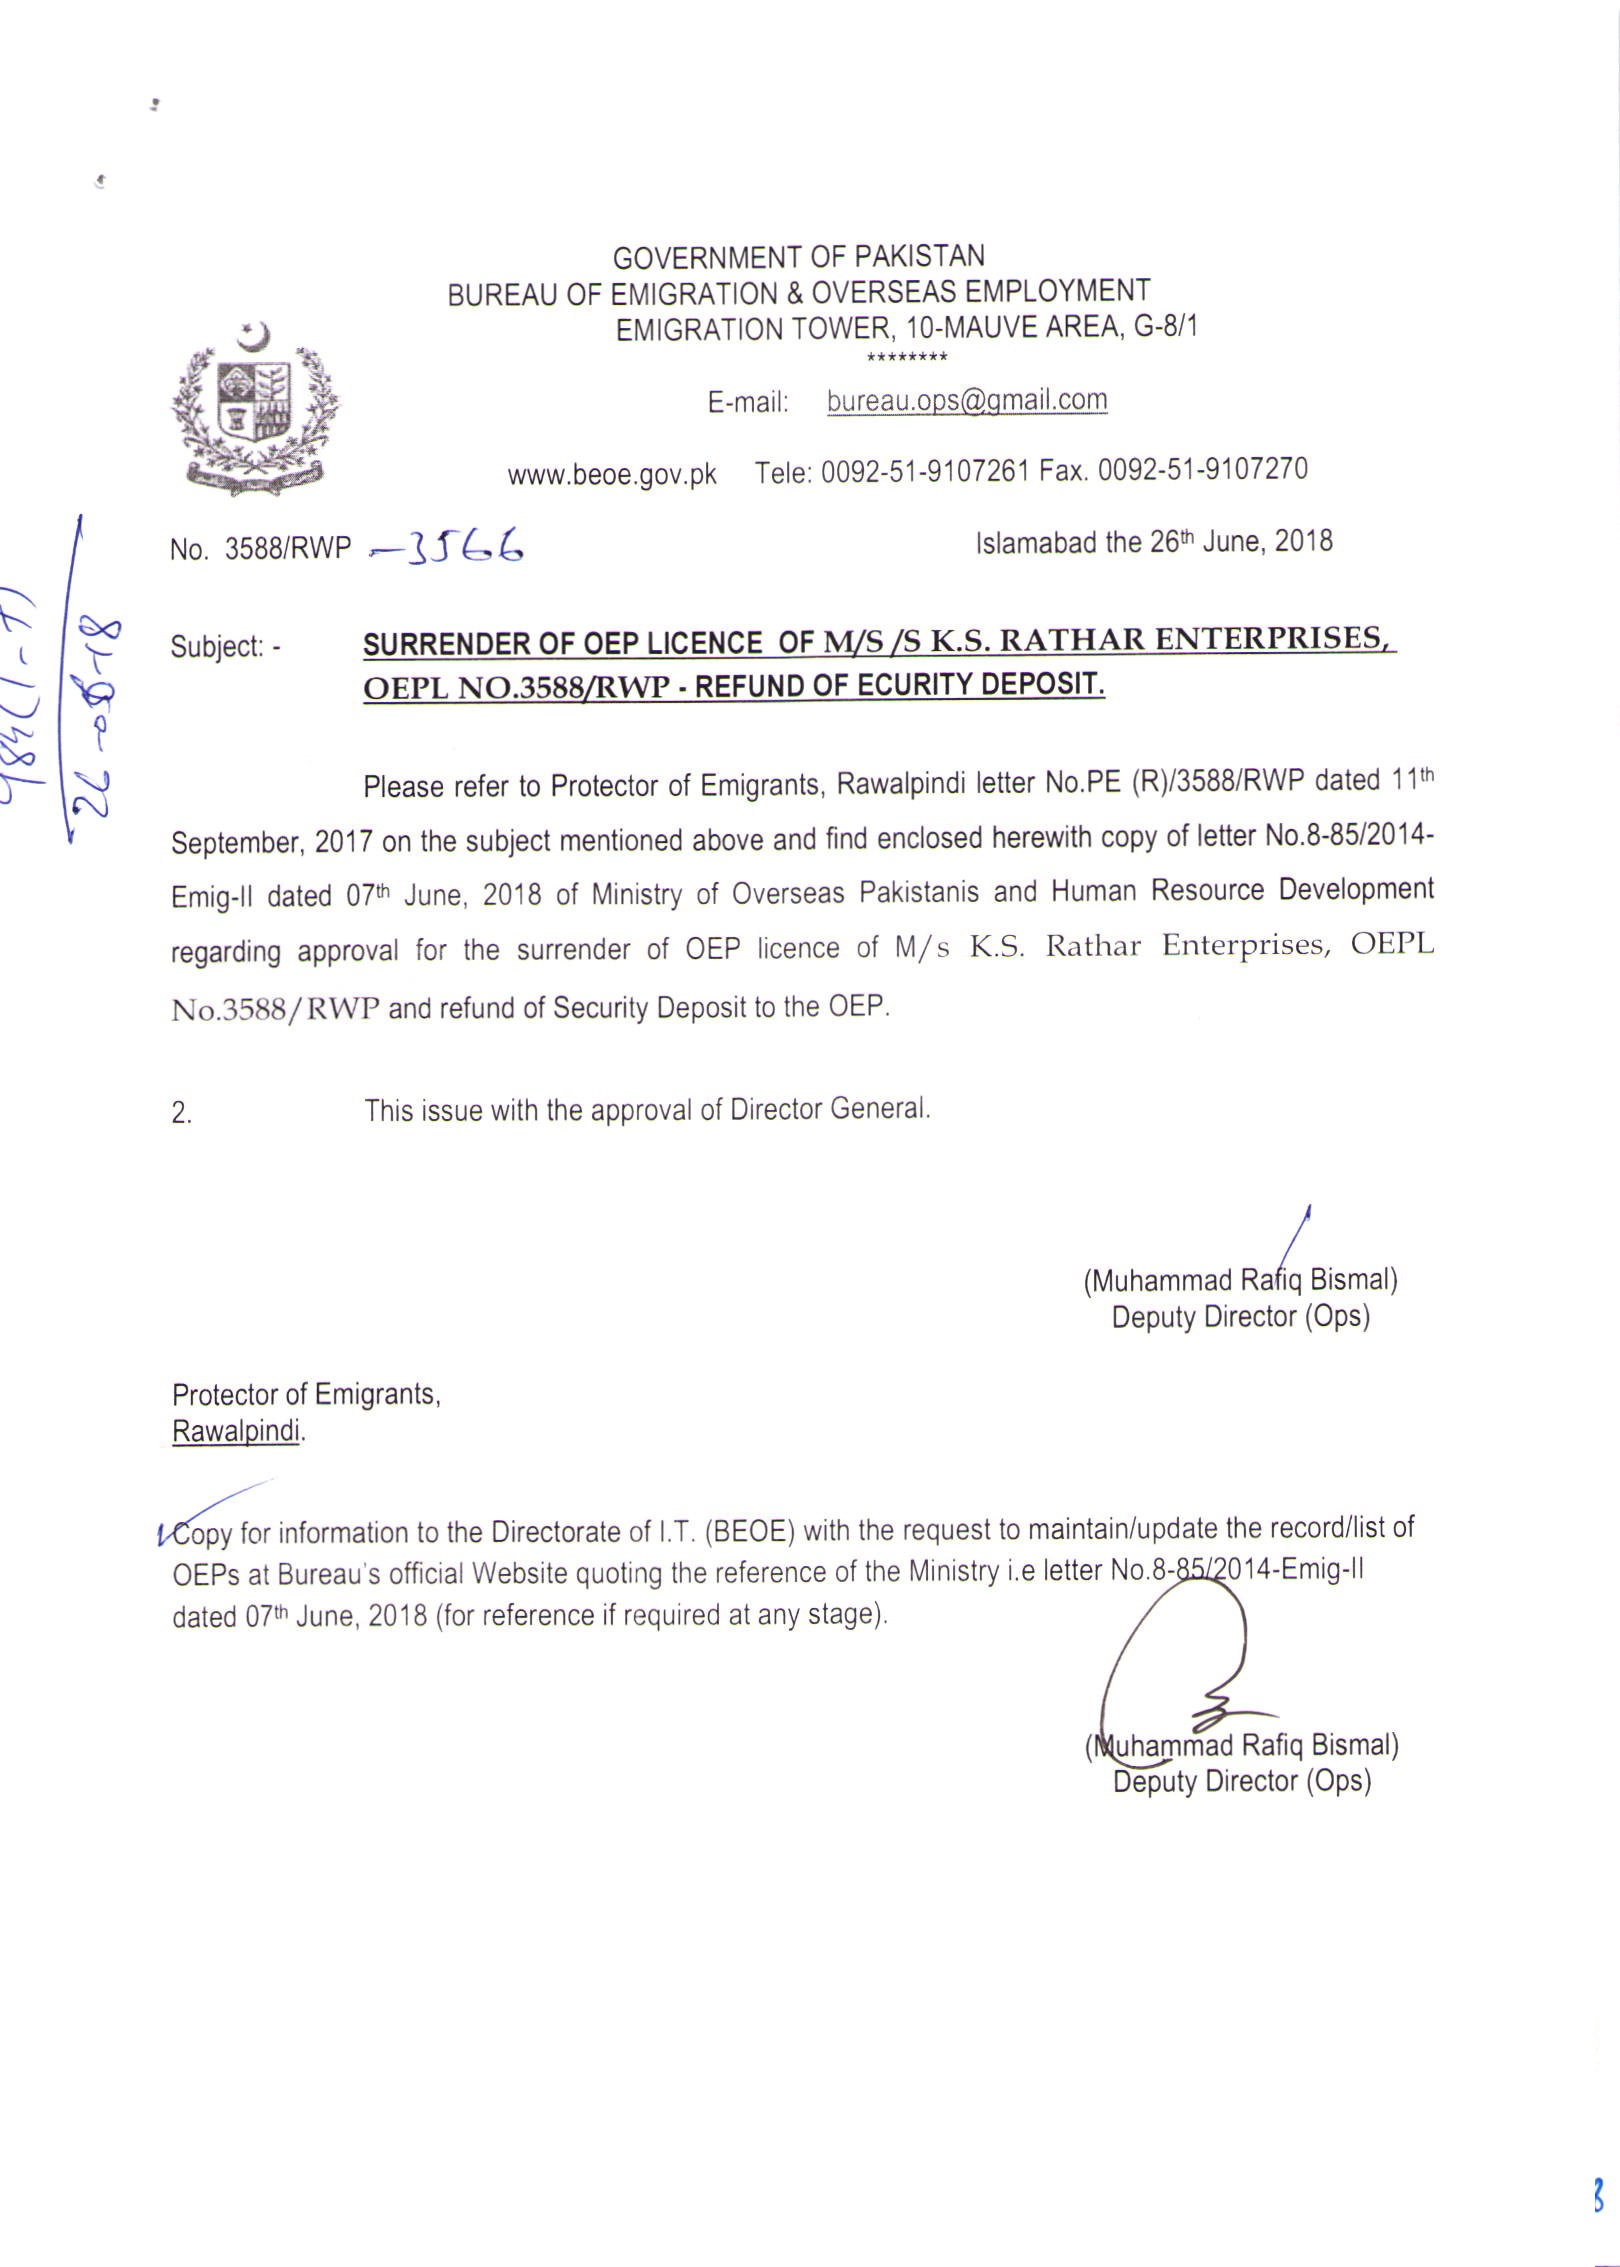 Security Deposit Refund Letter from beoe.gov.pk